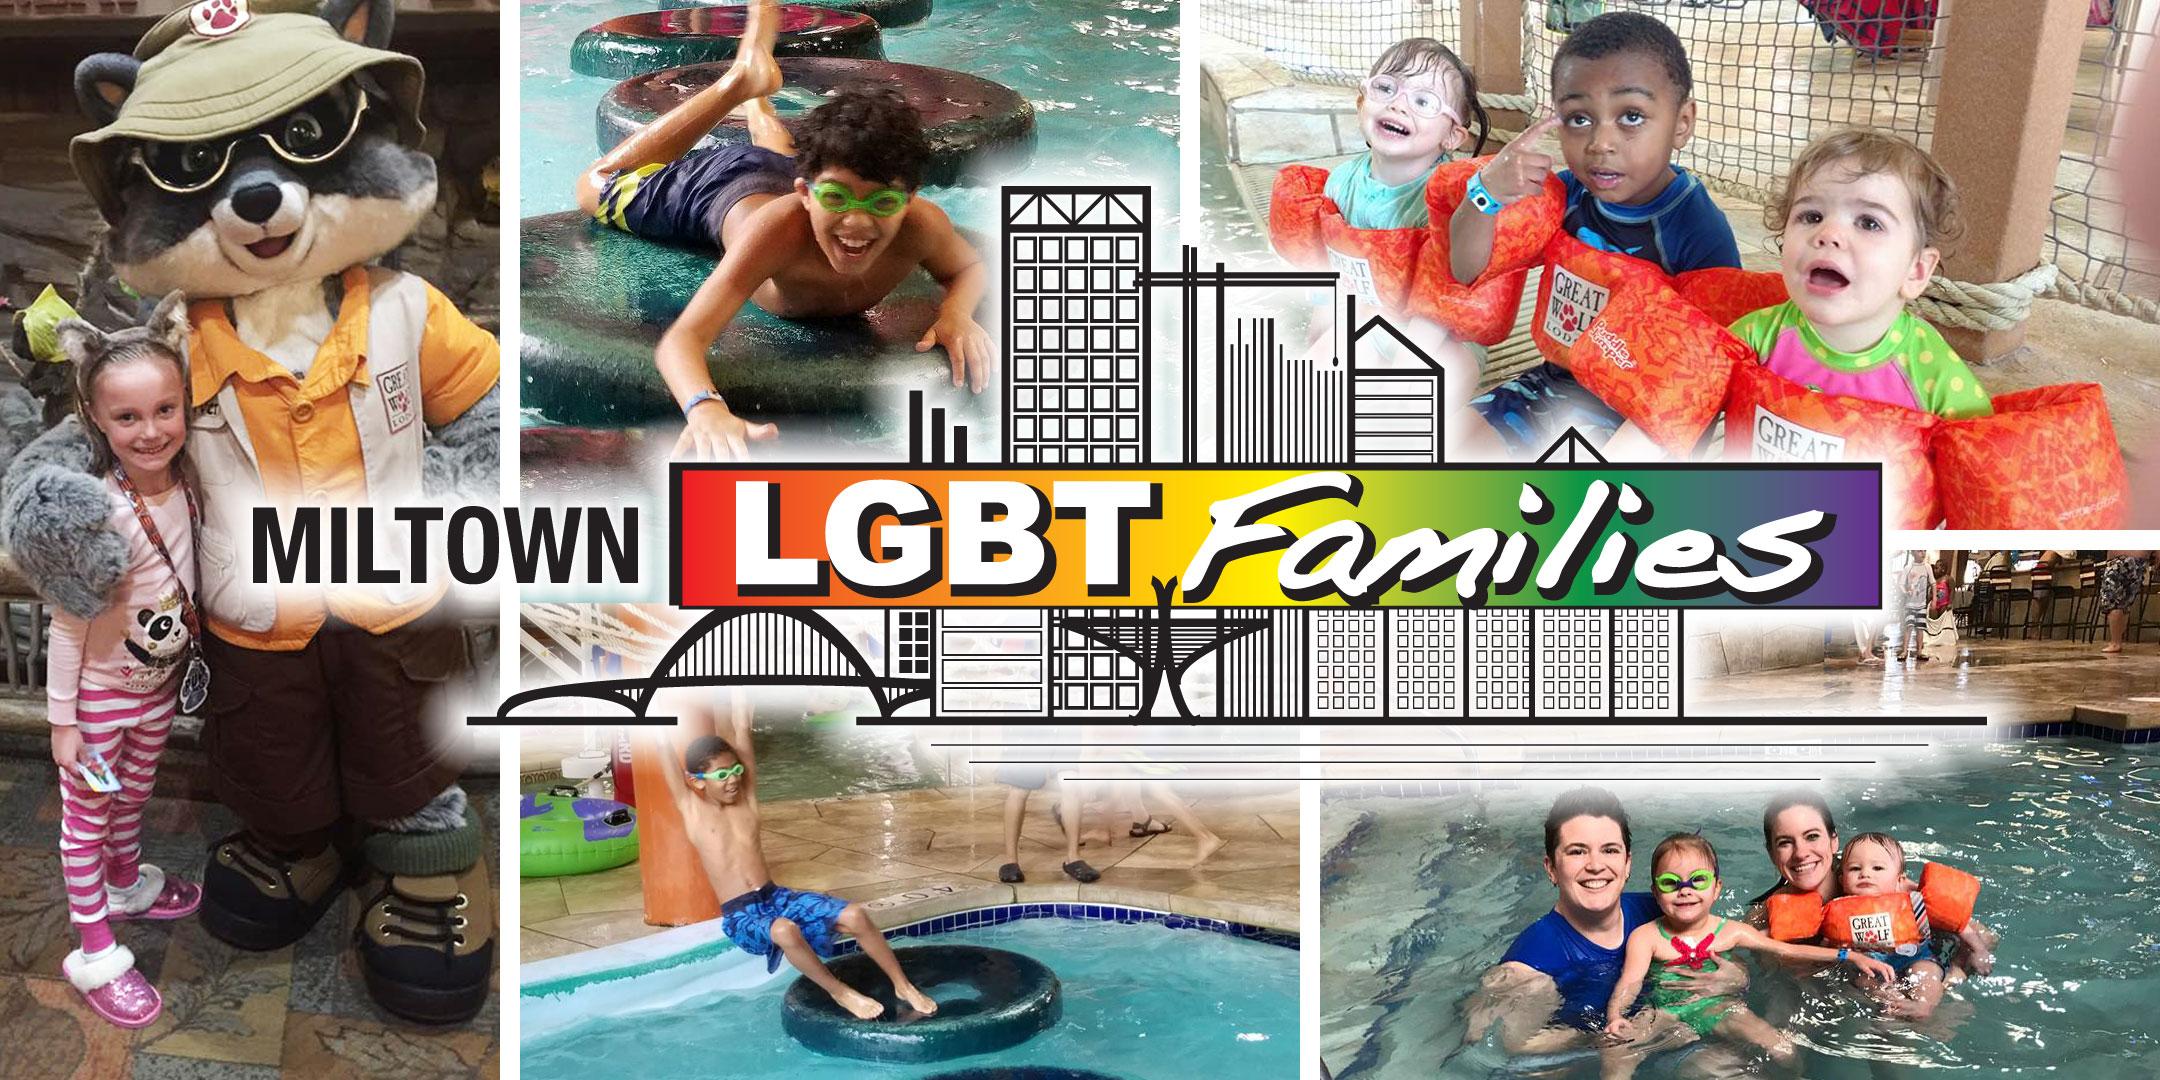 2020 Miltown LGBT Families Waterpark Weekend